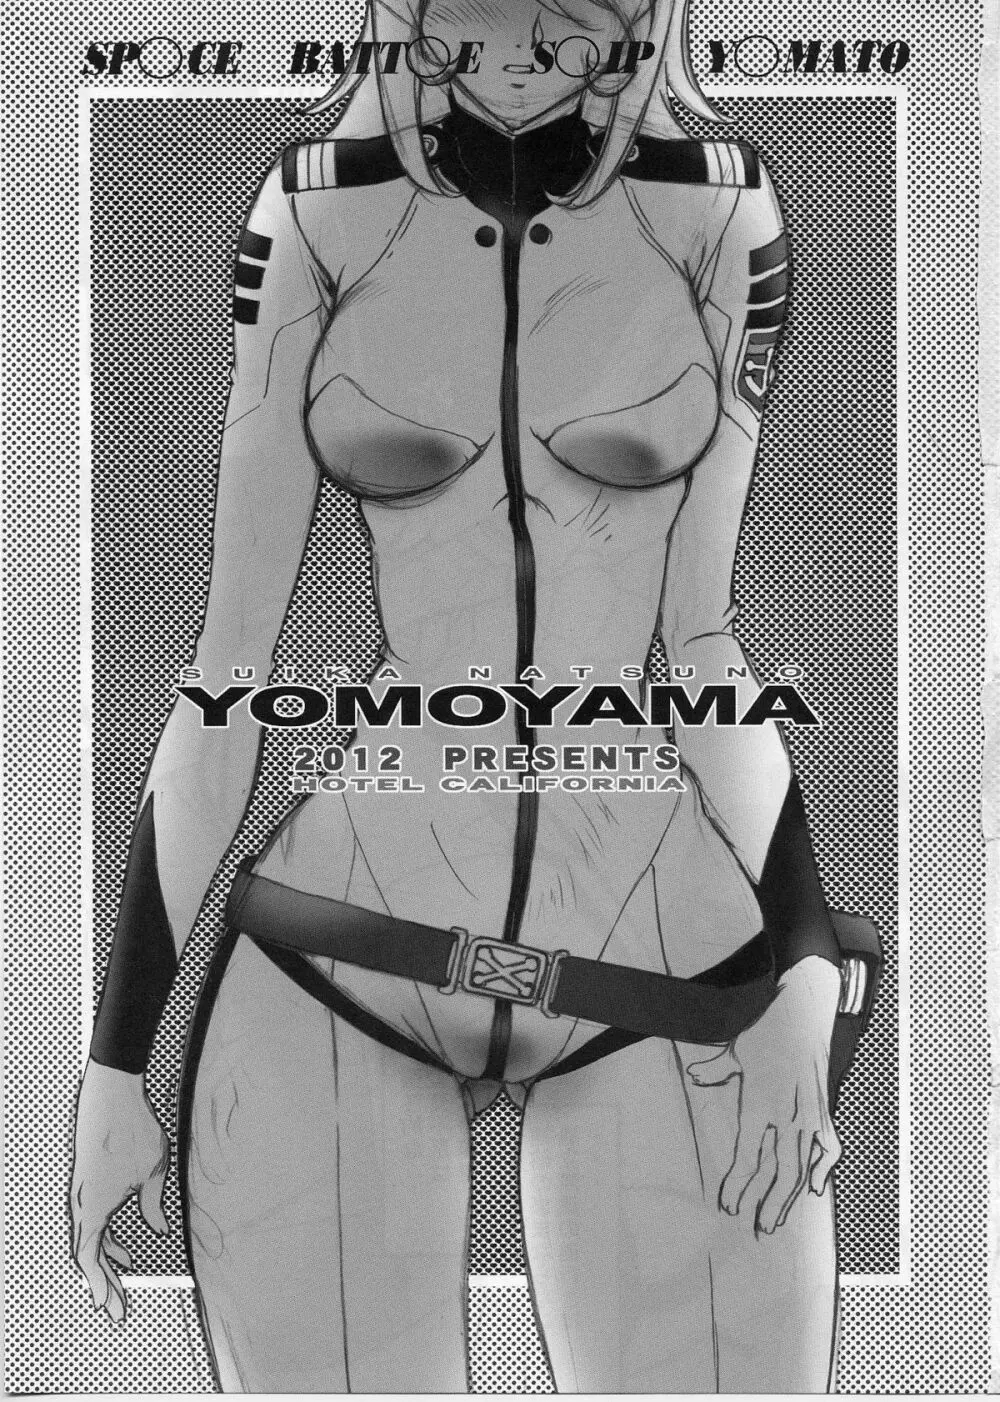 YOMOYAMA - page2